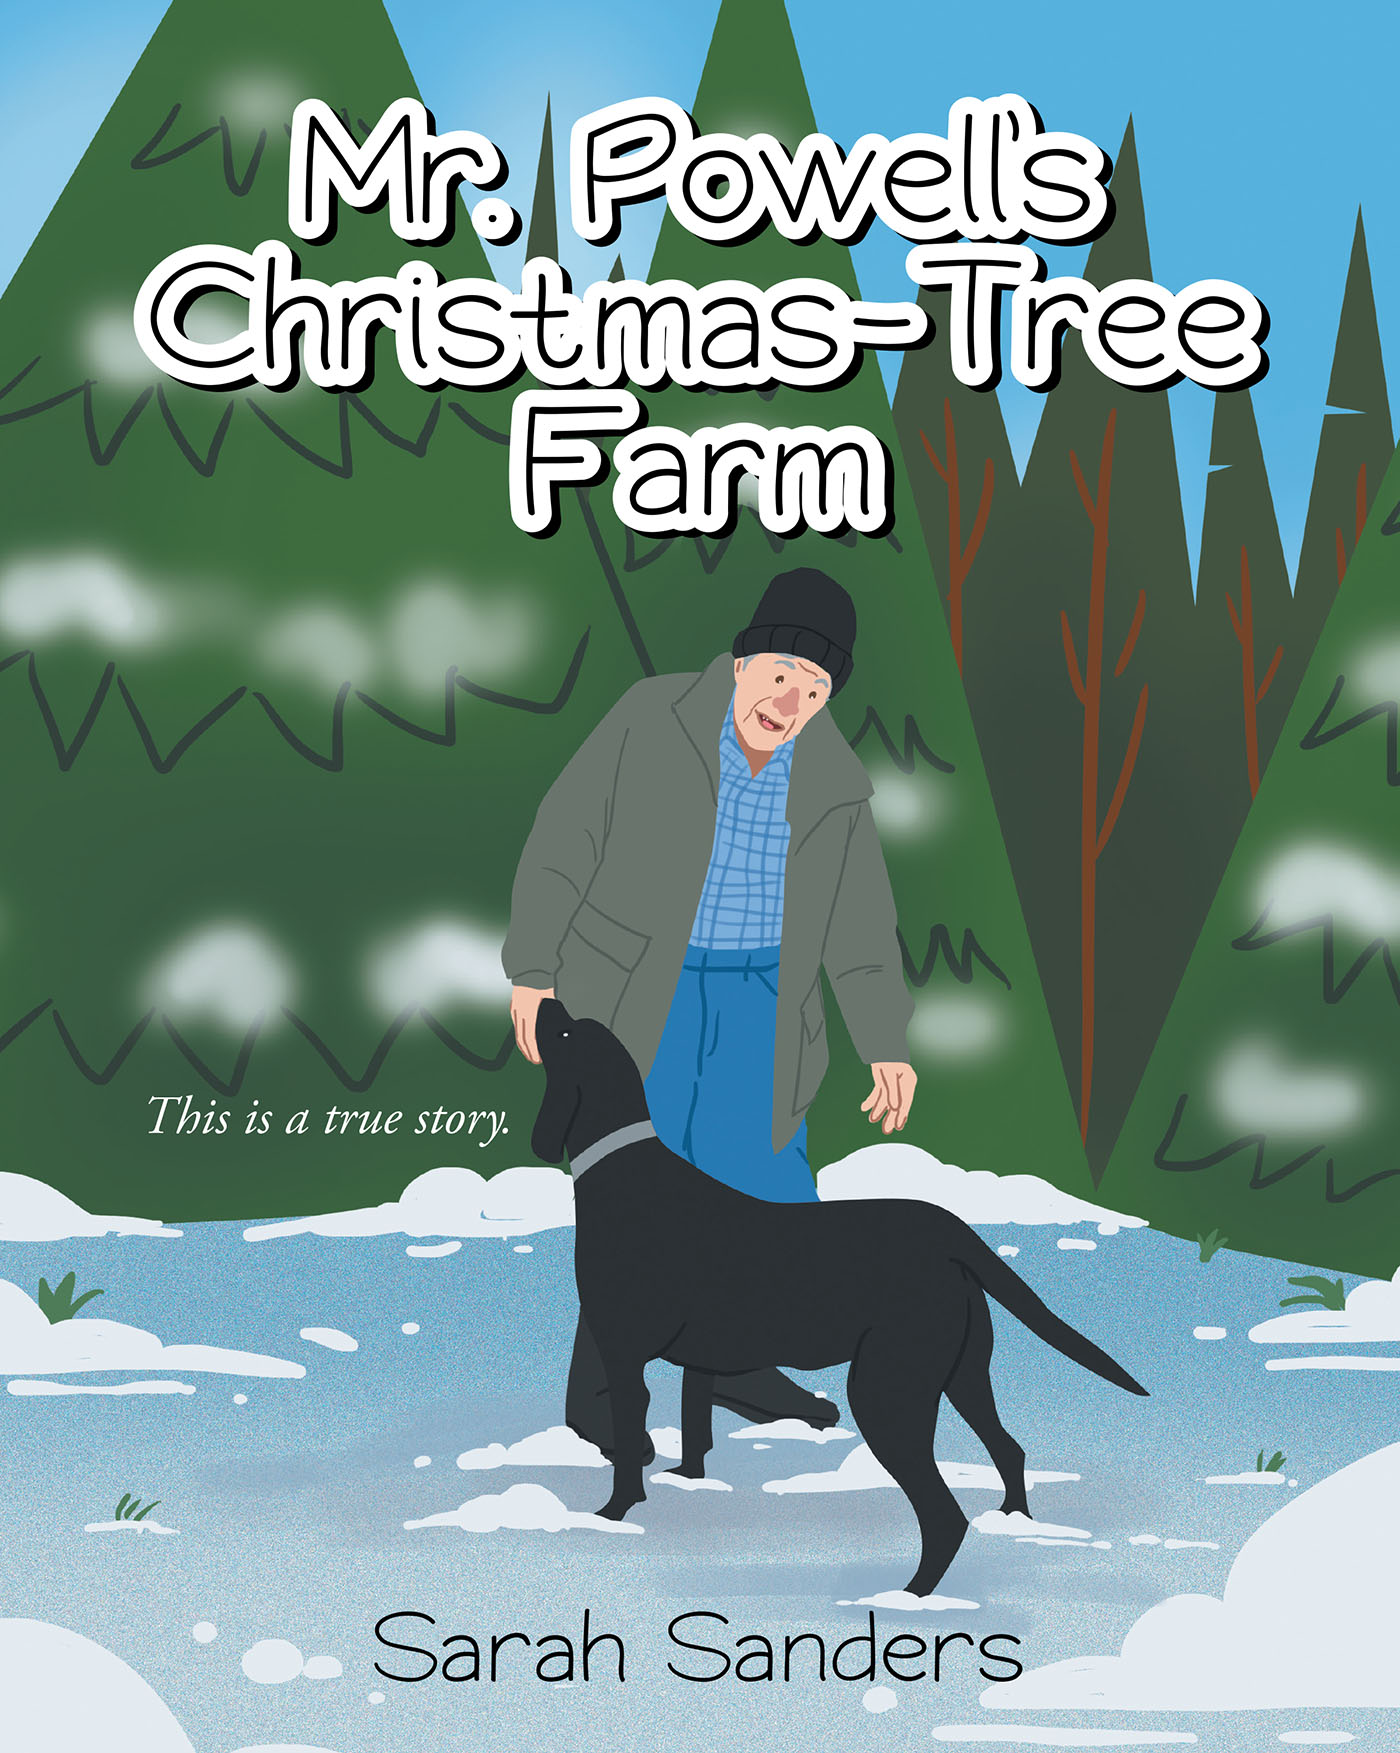 Mr. Powell's Christmas - Tree Farm Cover Image